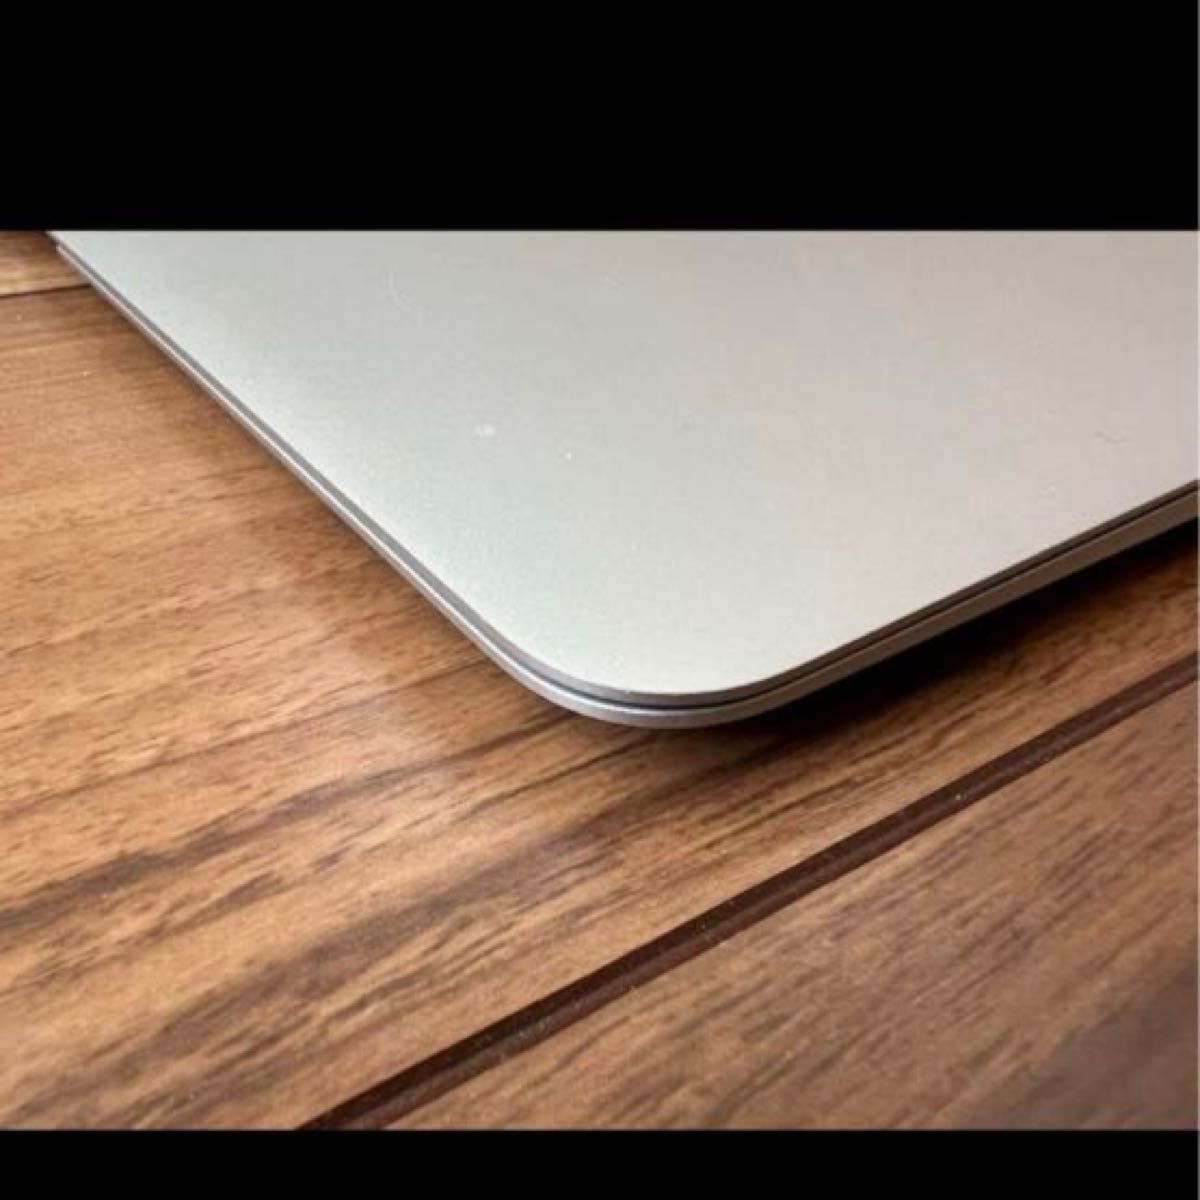 MacBook Air (13-inch, Early 2014)